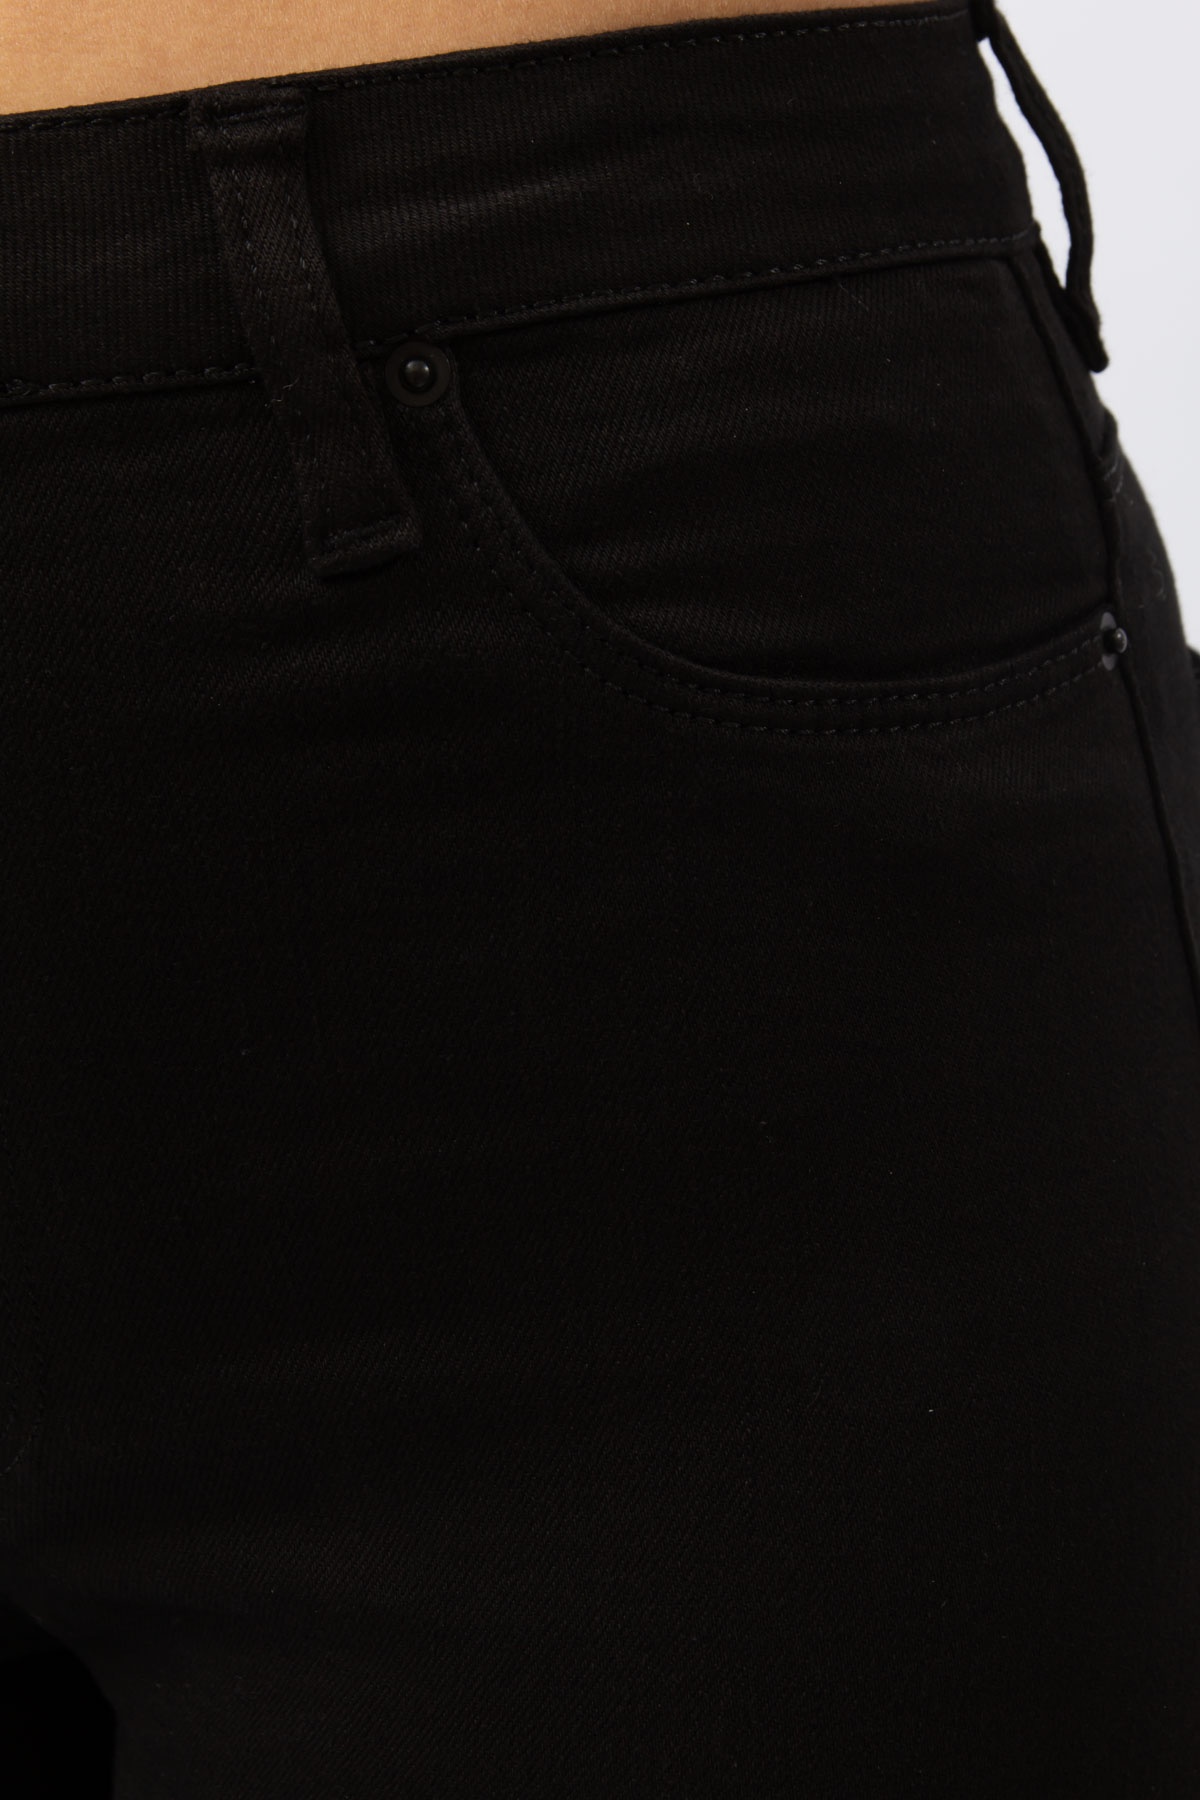 Siyah Renk XS-XL Beden Süper Skinny Yüksel Bel Tayt Pantolon